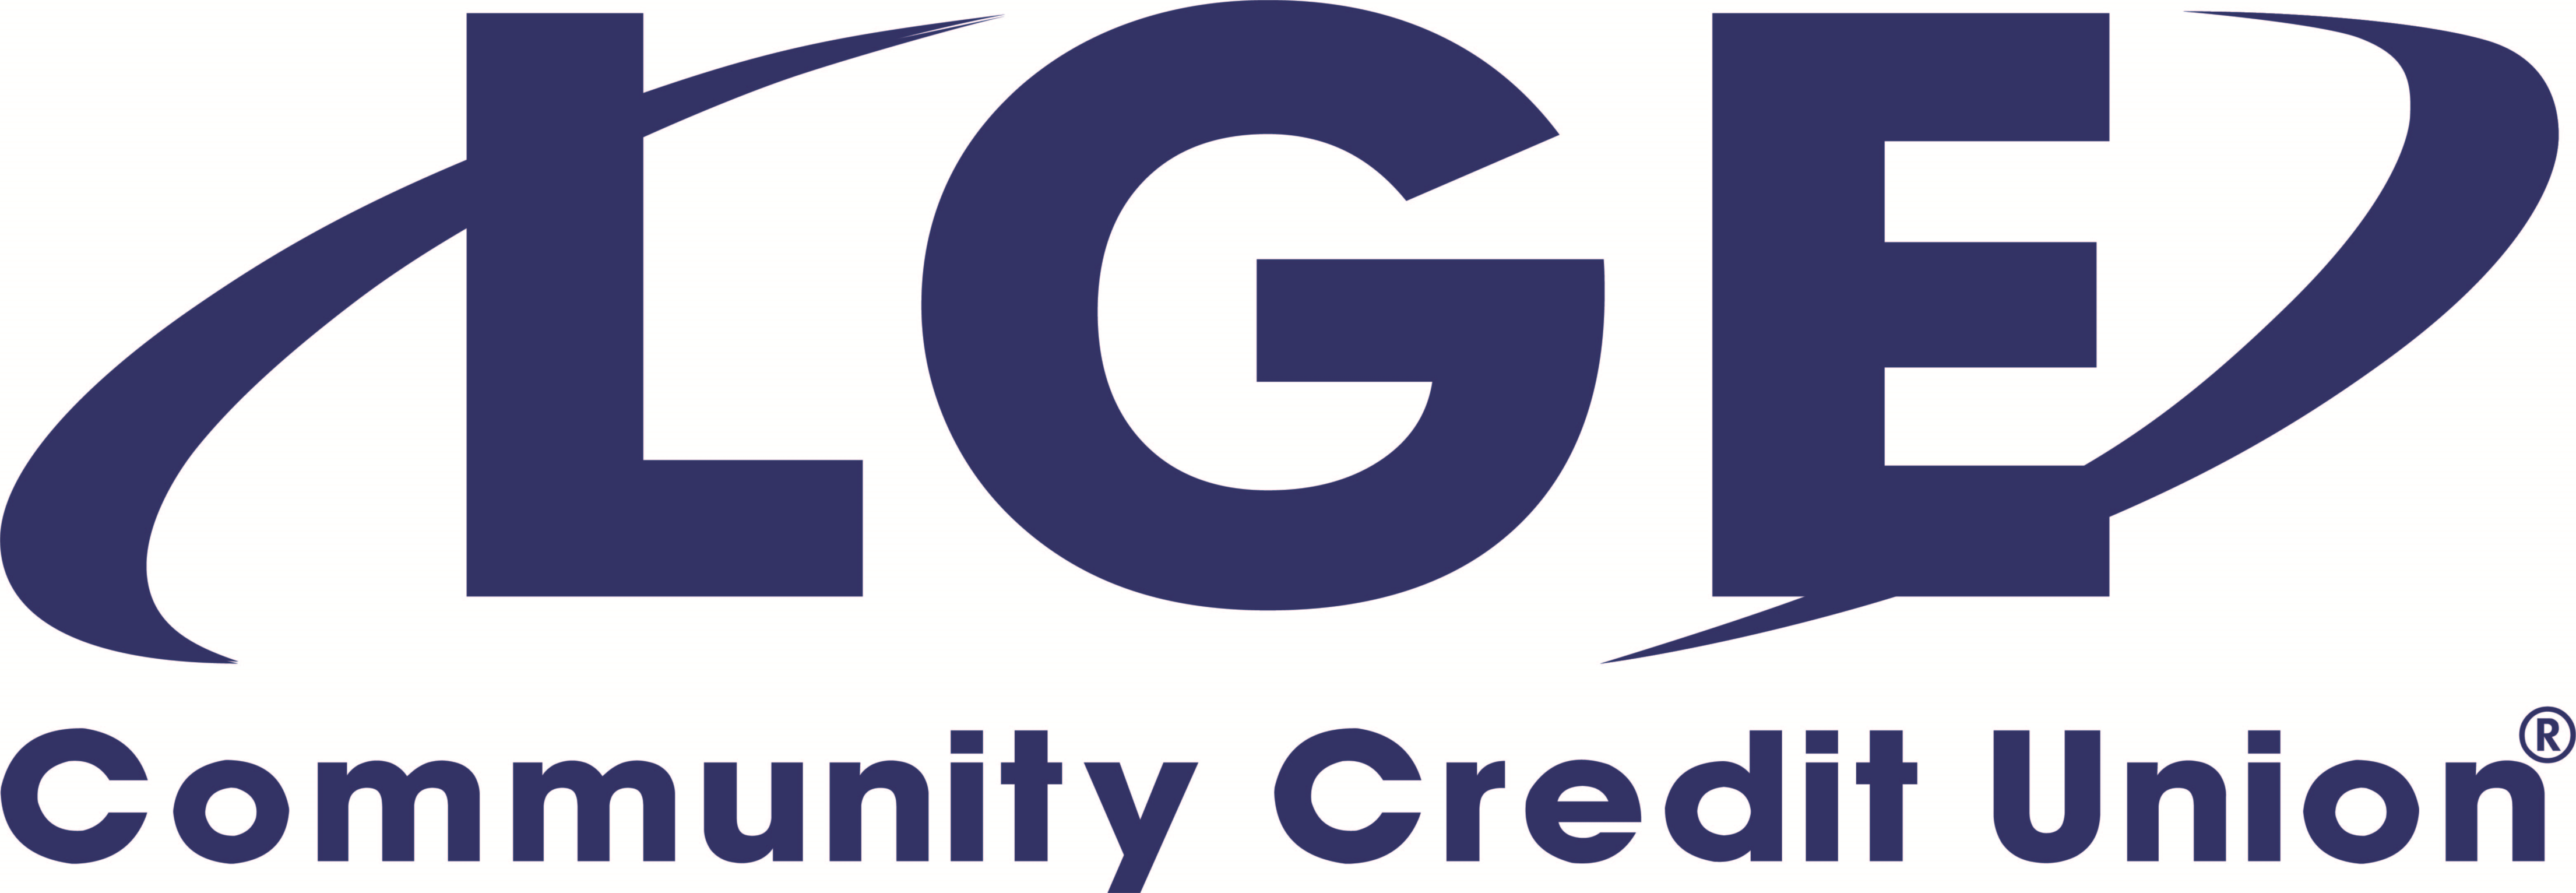 LGE Credit Union Logo.png